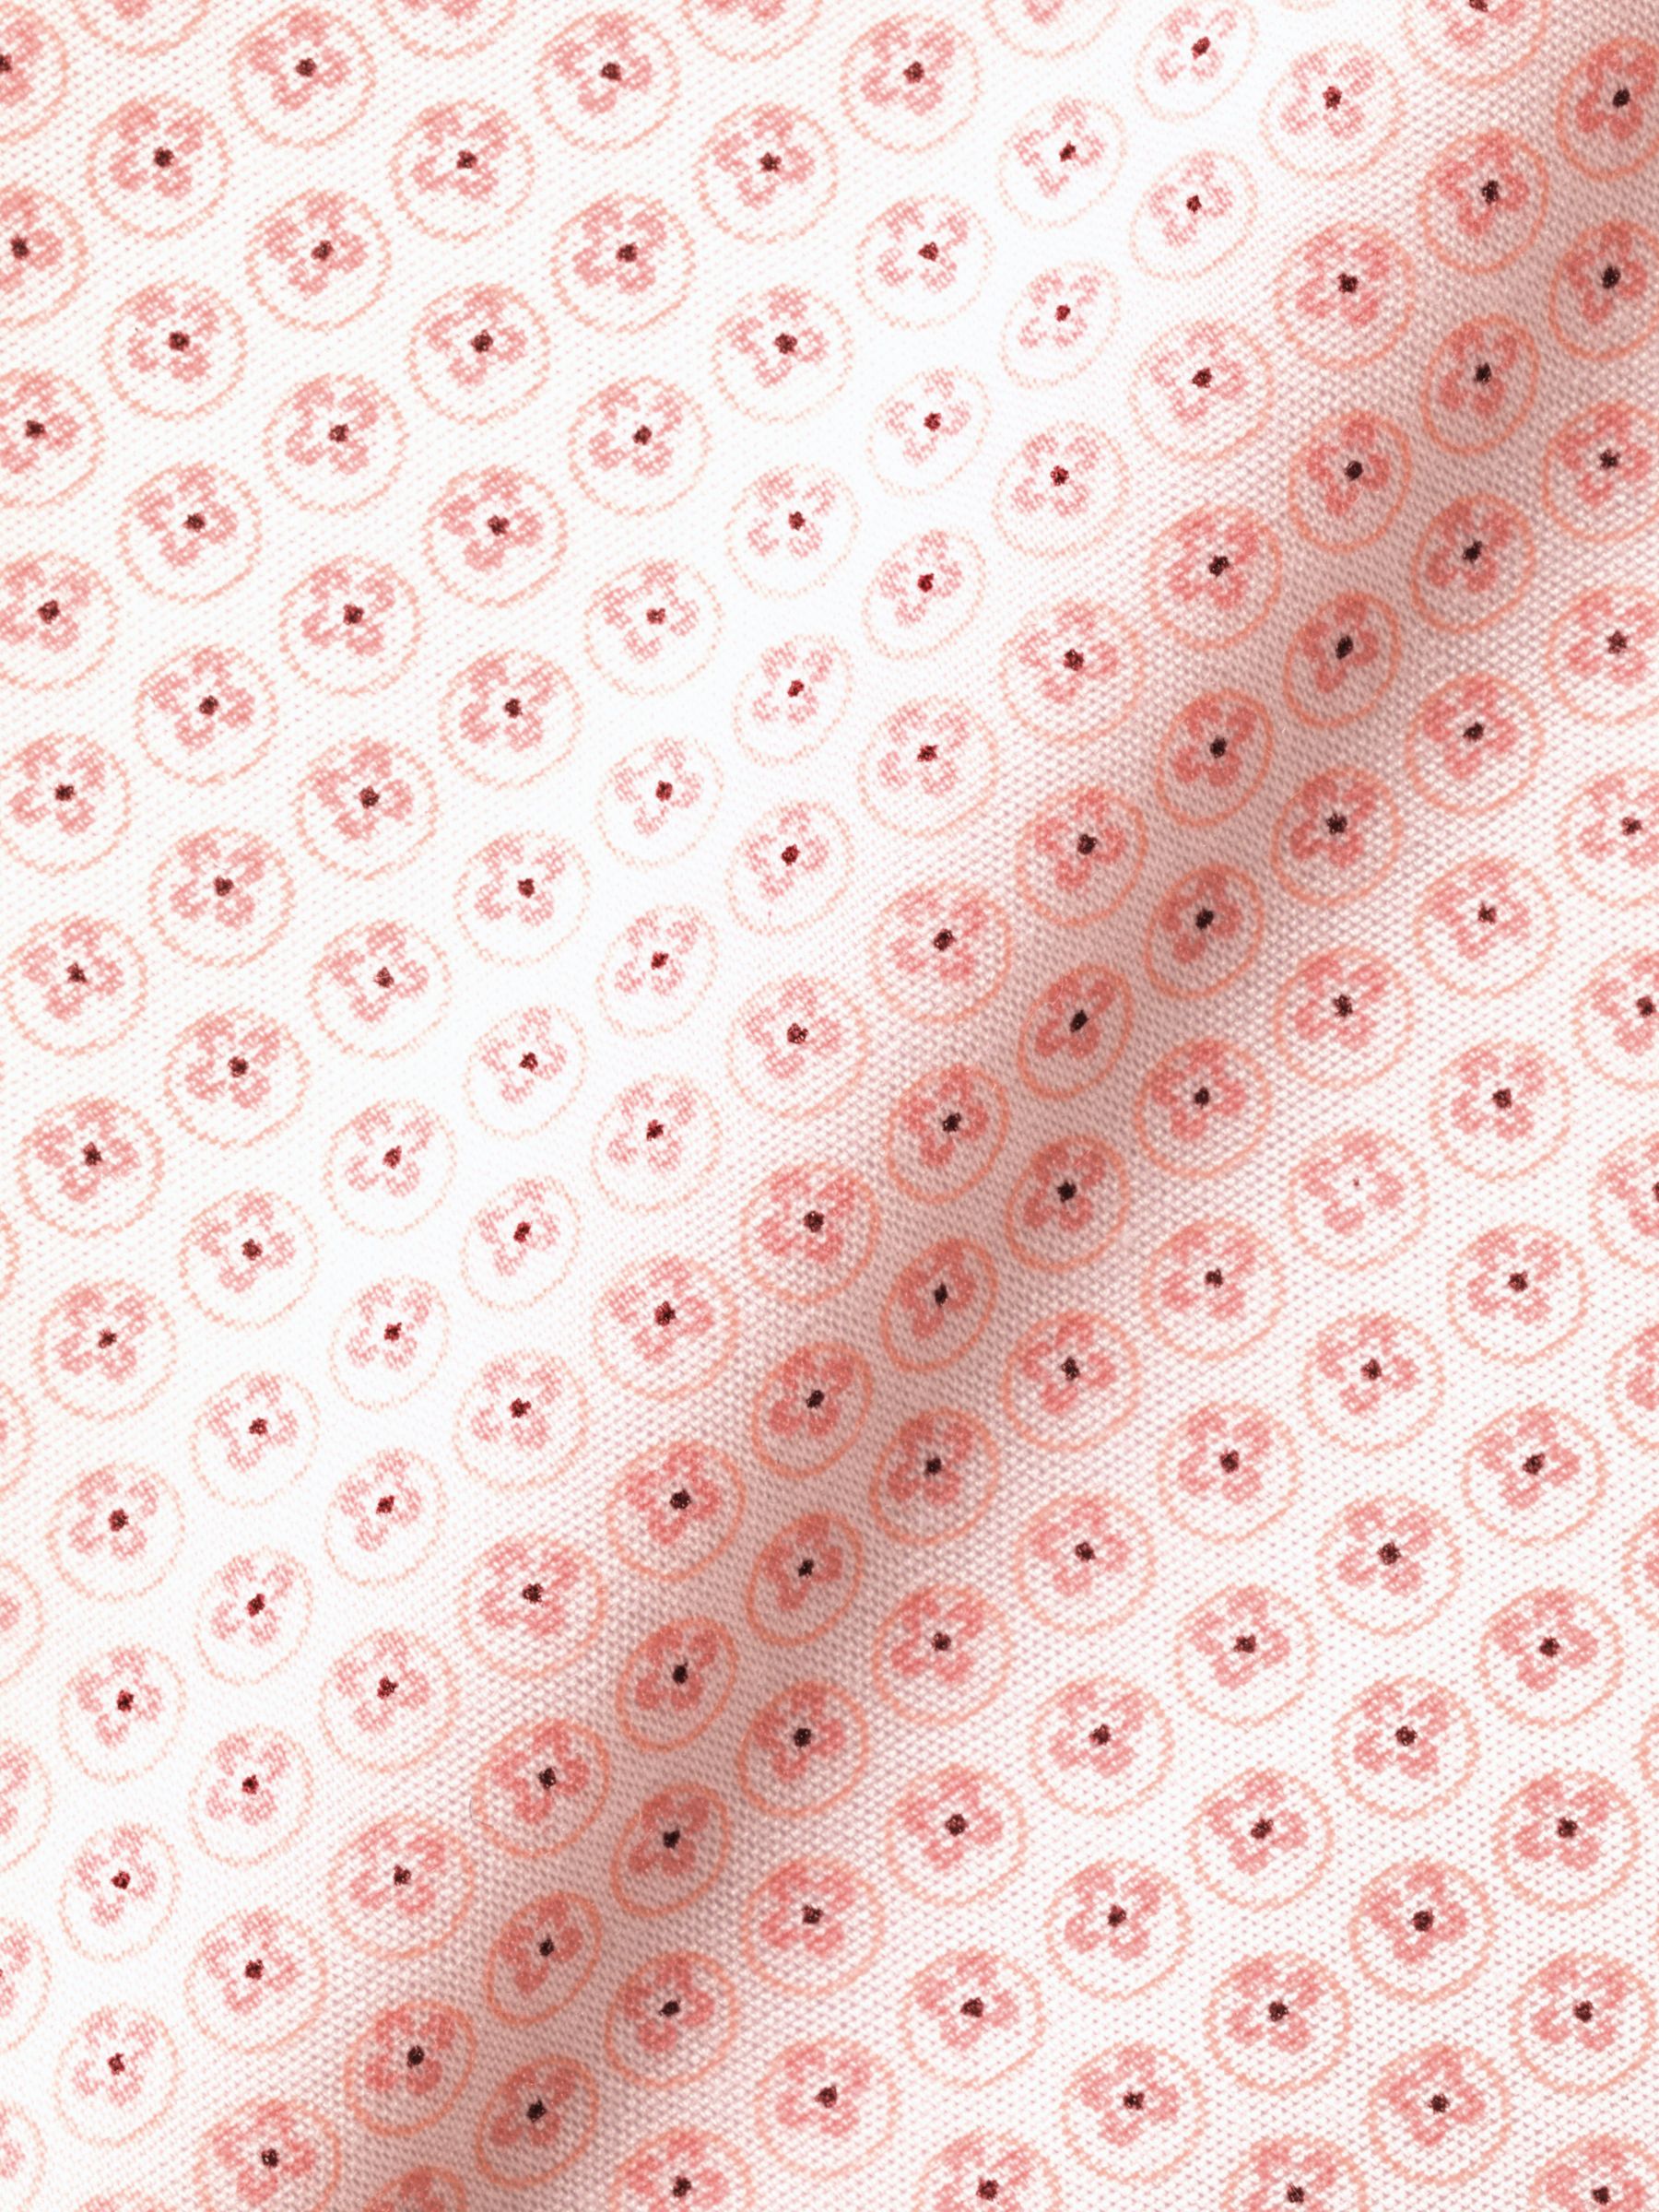 Charles Tyrwhitt Floral Geometric Print Non-Iron Slim Fit Shirt, Pink, XXL